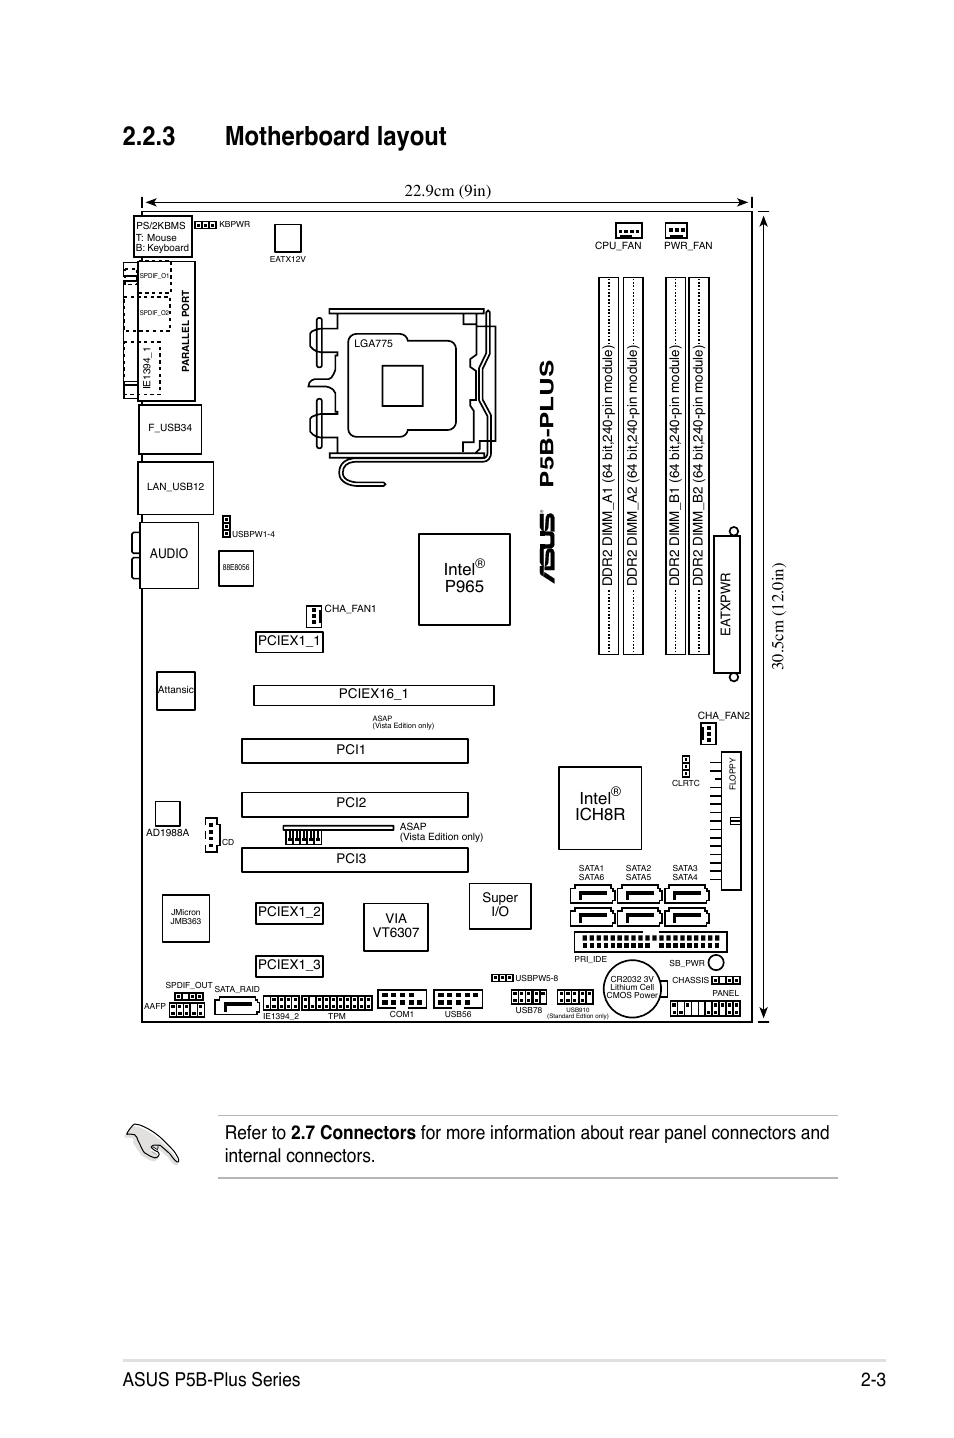 3 motherboard layout, Asus p5b-plus series 2-3, P5b-plus | Asus P5B-Plus  VISTA Edition User Manual | Page 29 / 172 | Original mode